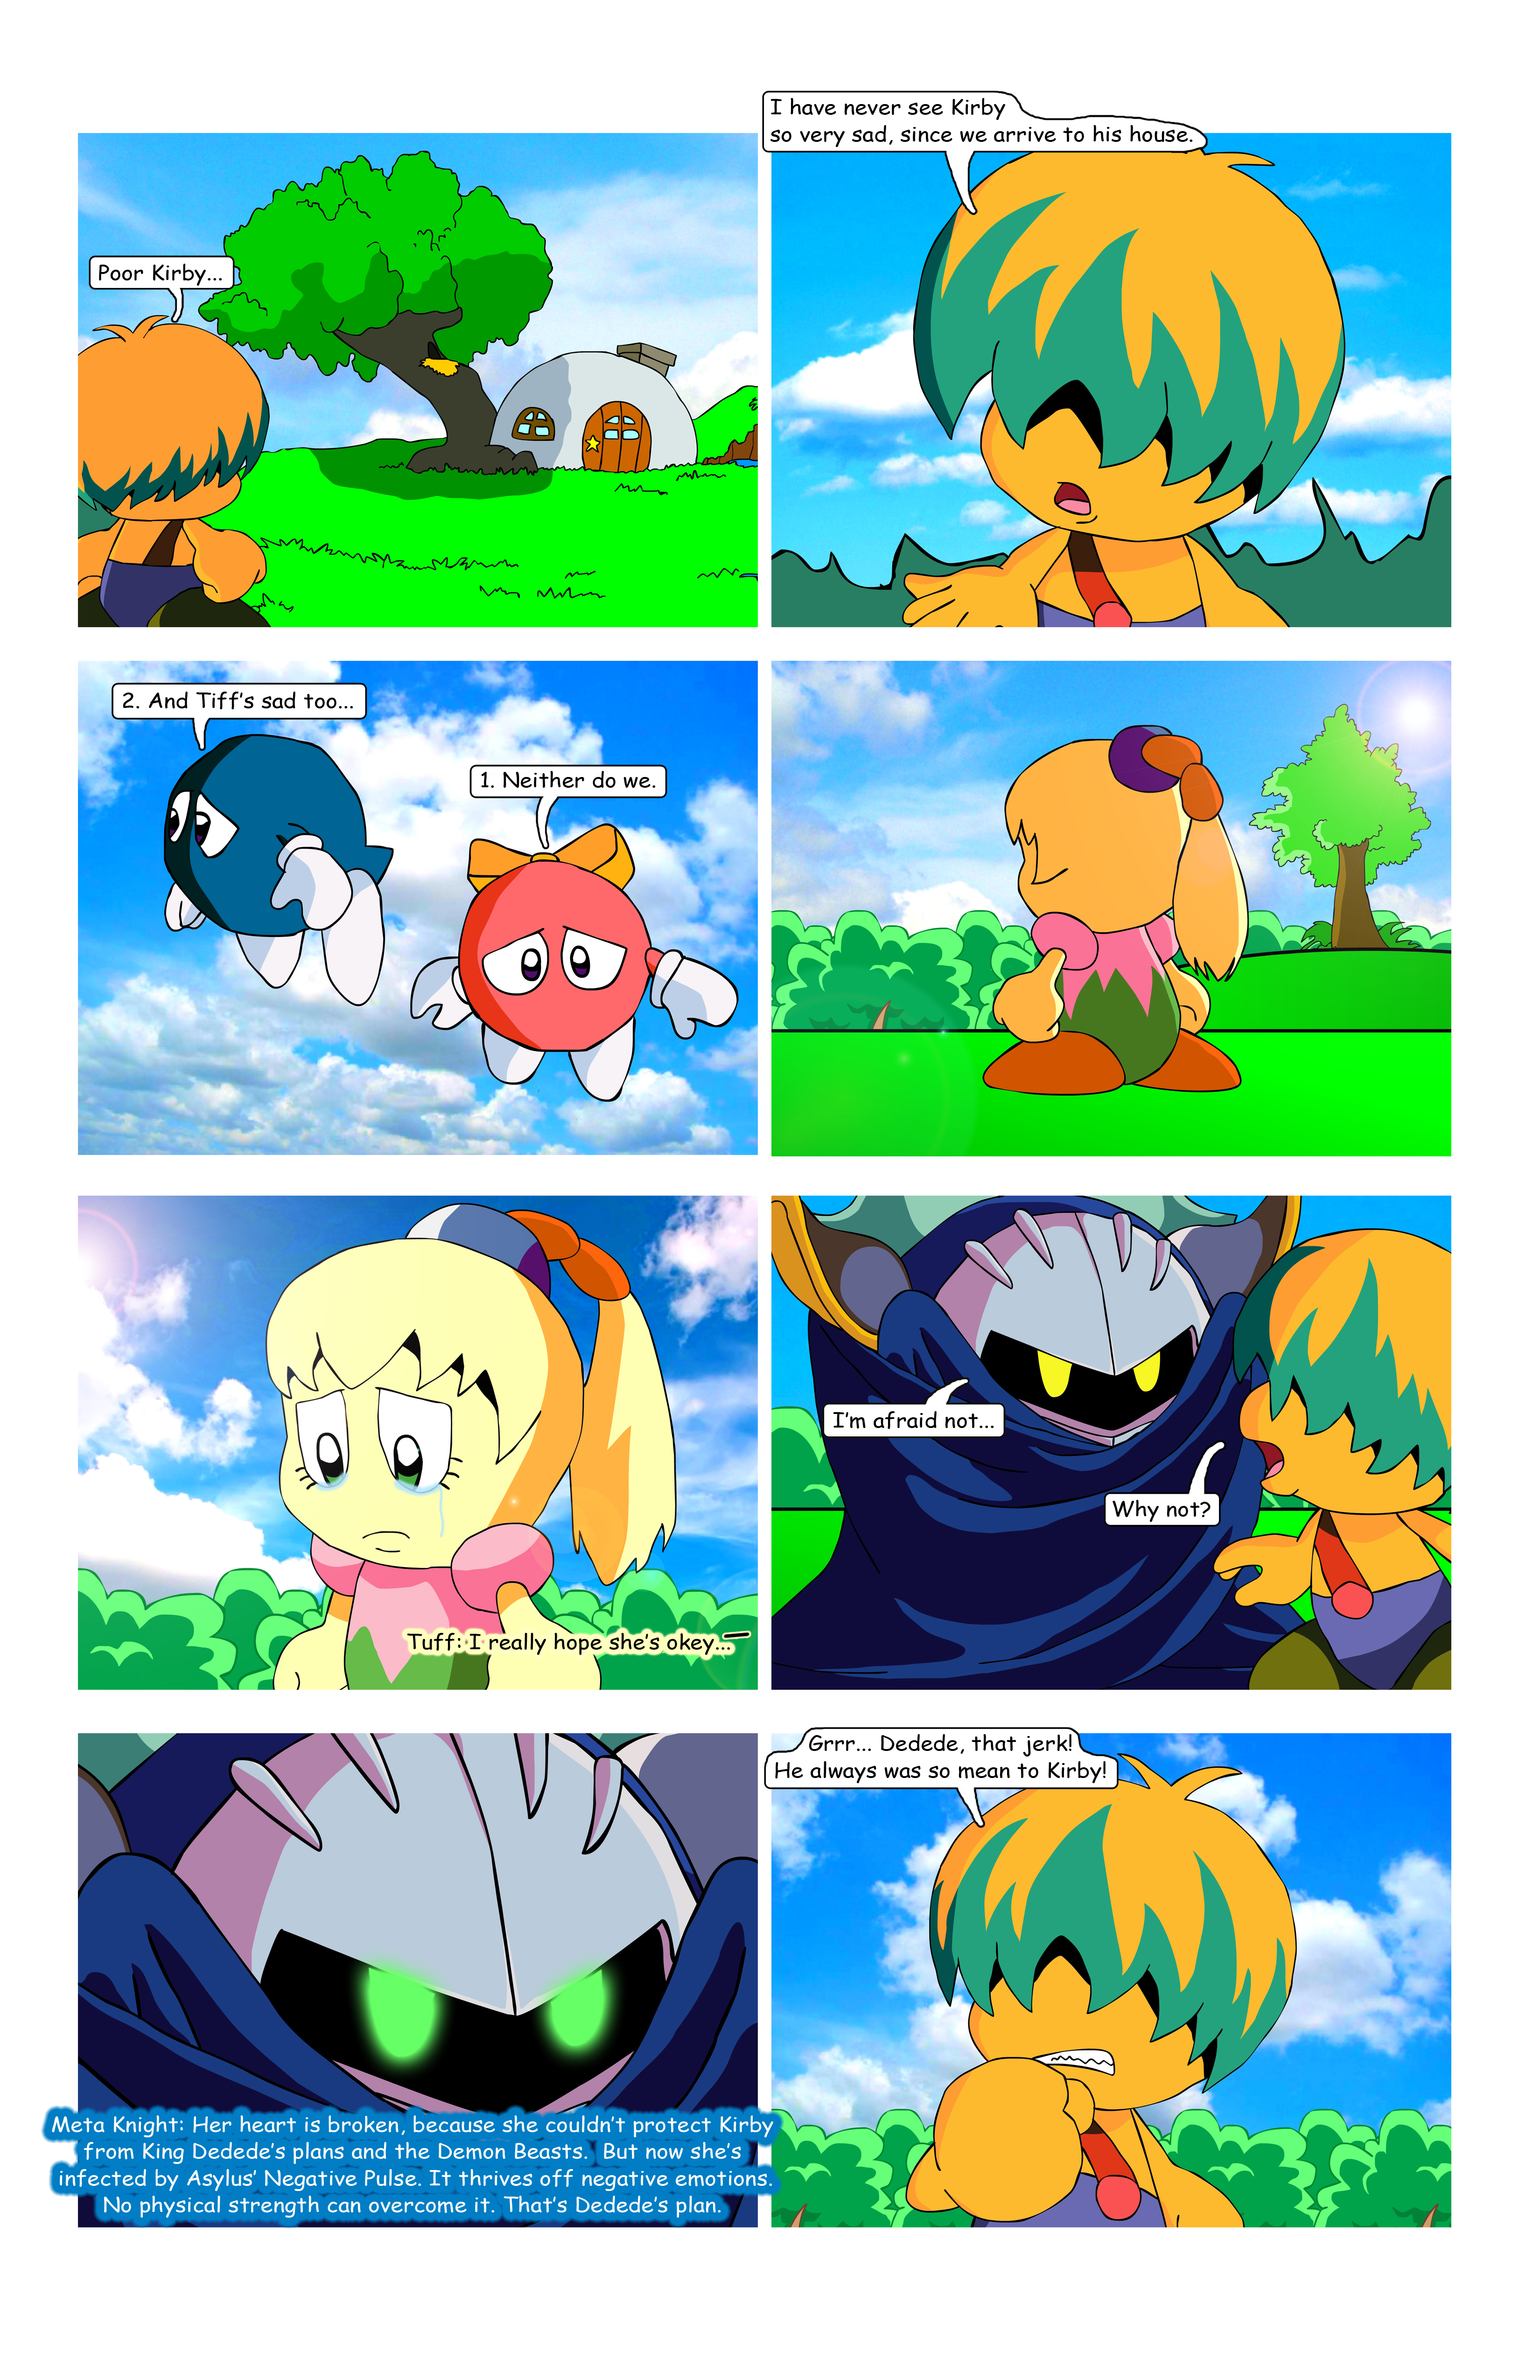 Kirby Princess of Dream Land comic Page-38 by Deitz94 on DeviantArt